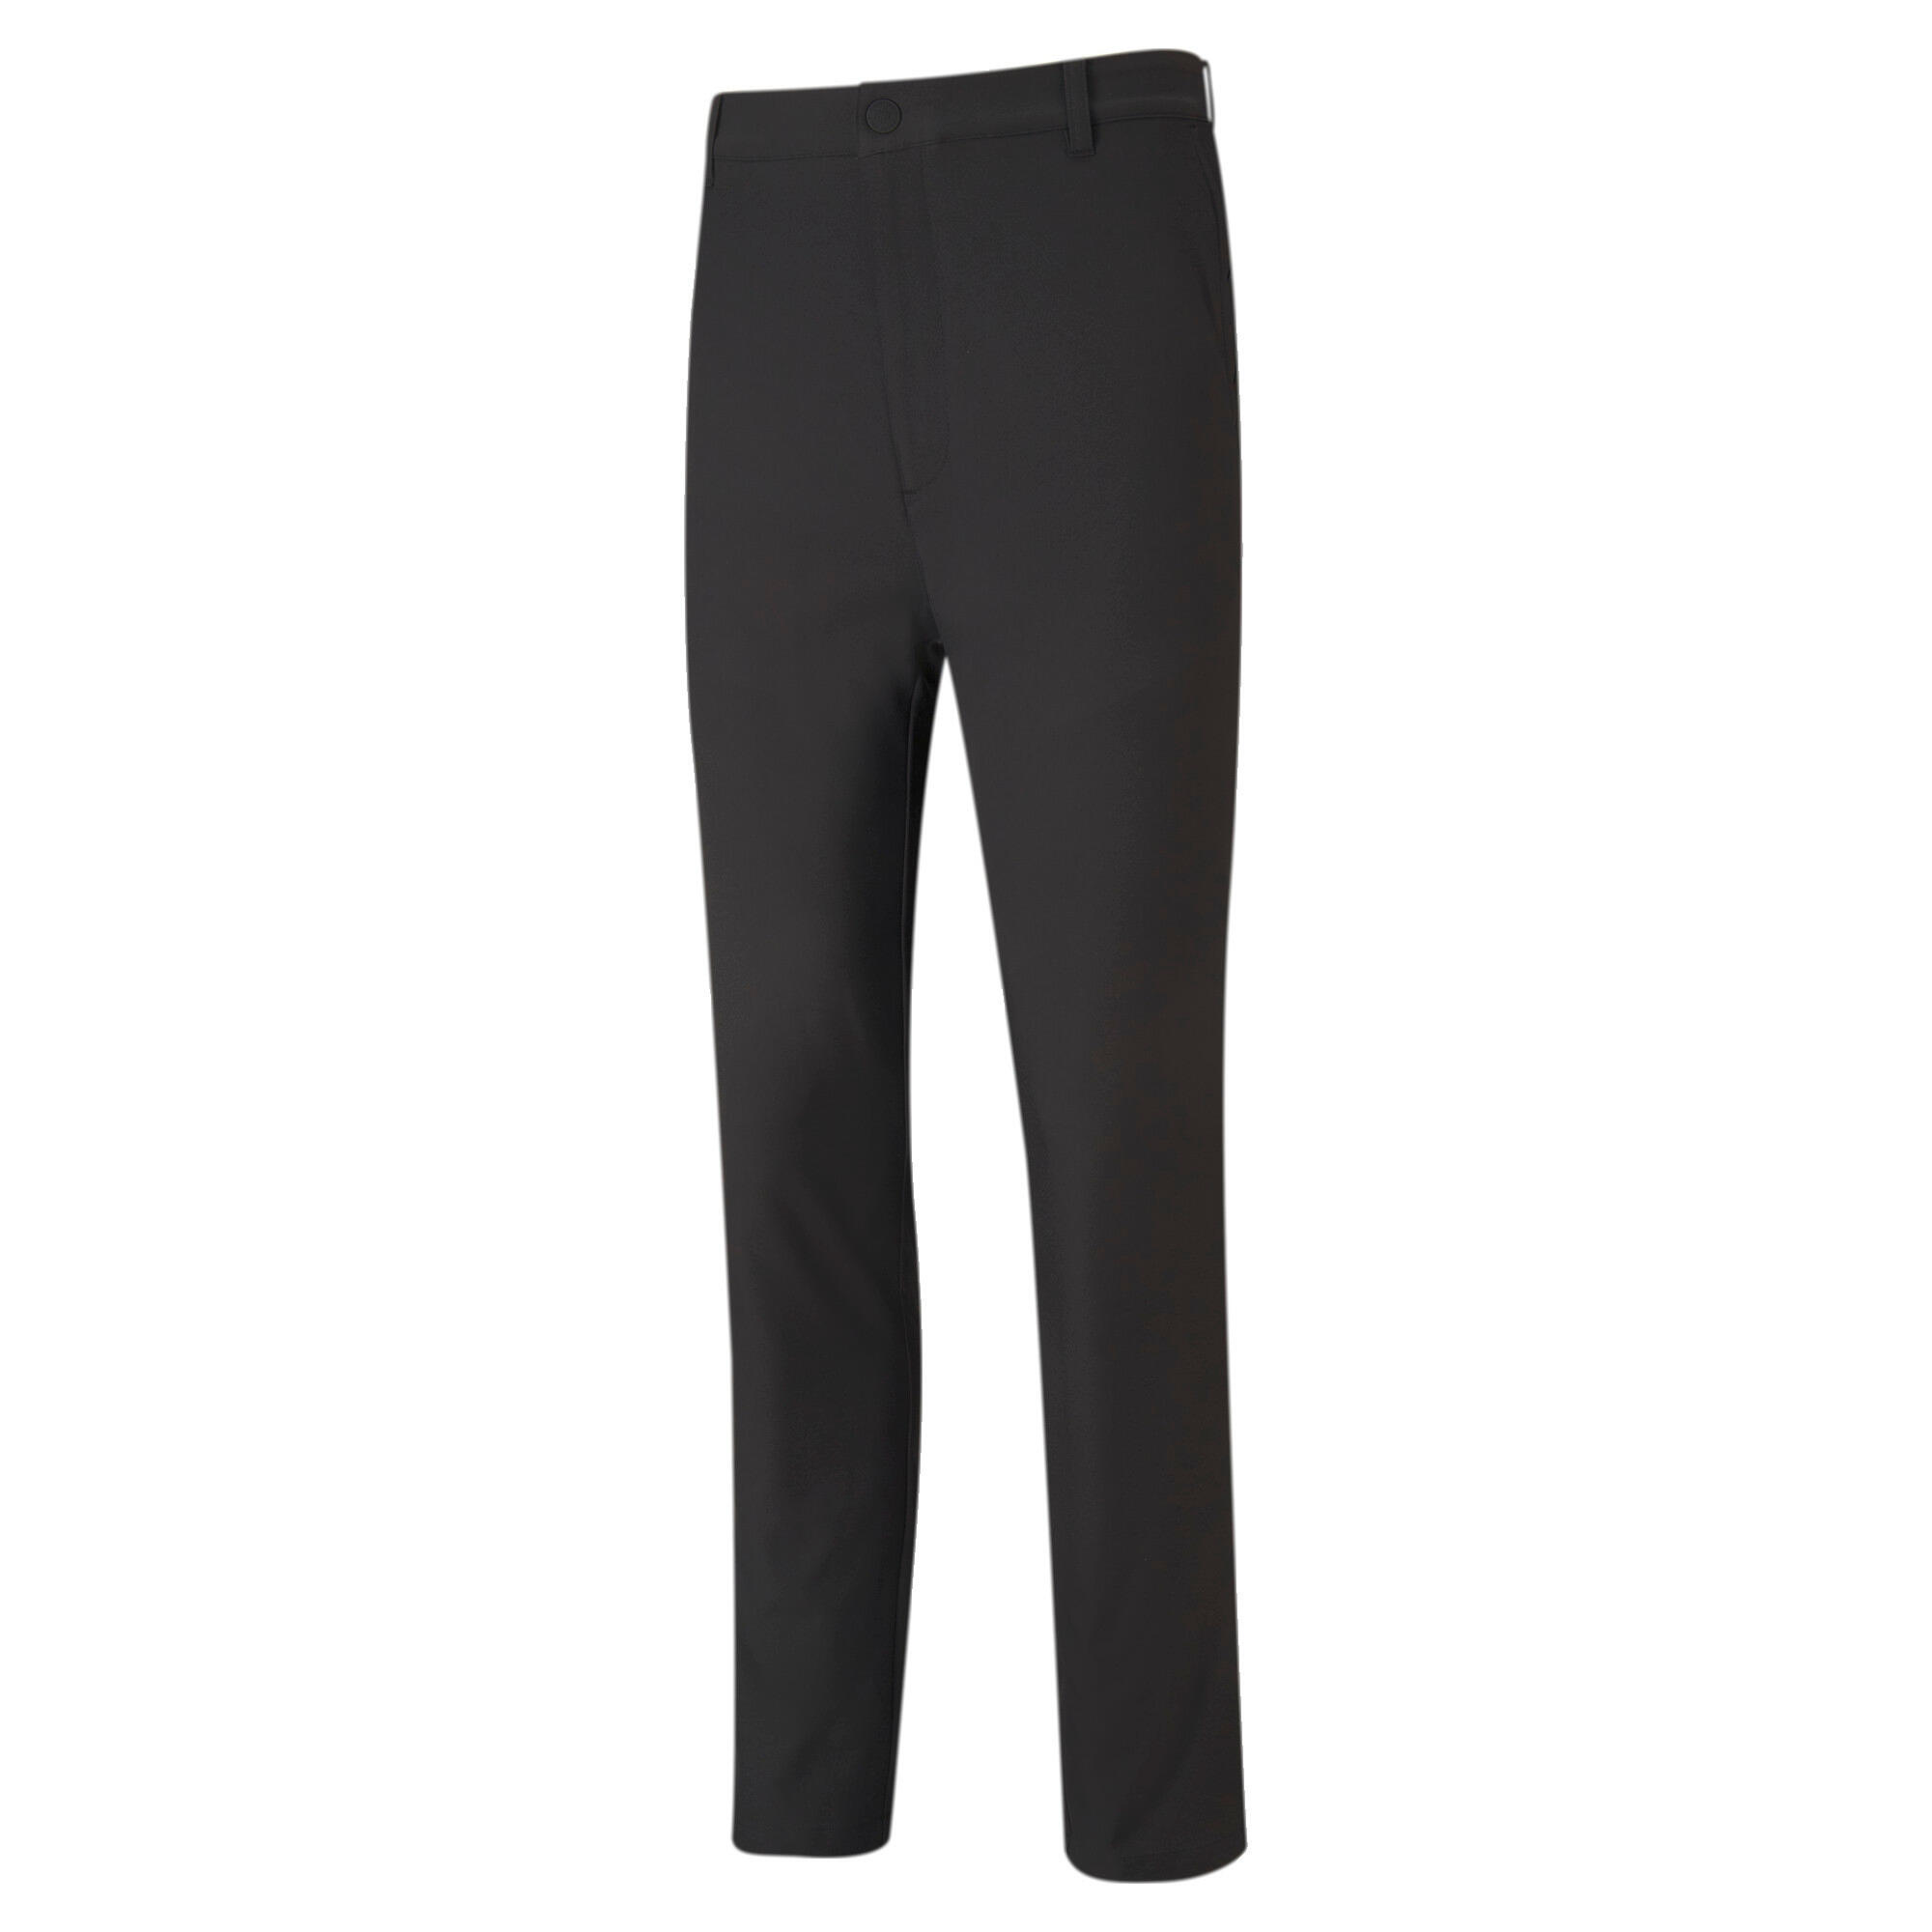 PUMA Mens Jackpot Tailored Golf Pants Trousers - Black 1/6